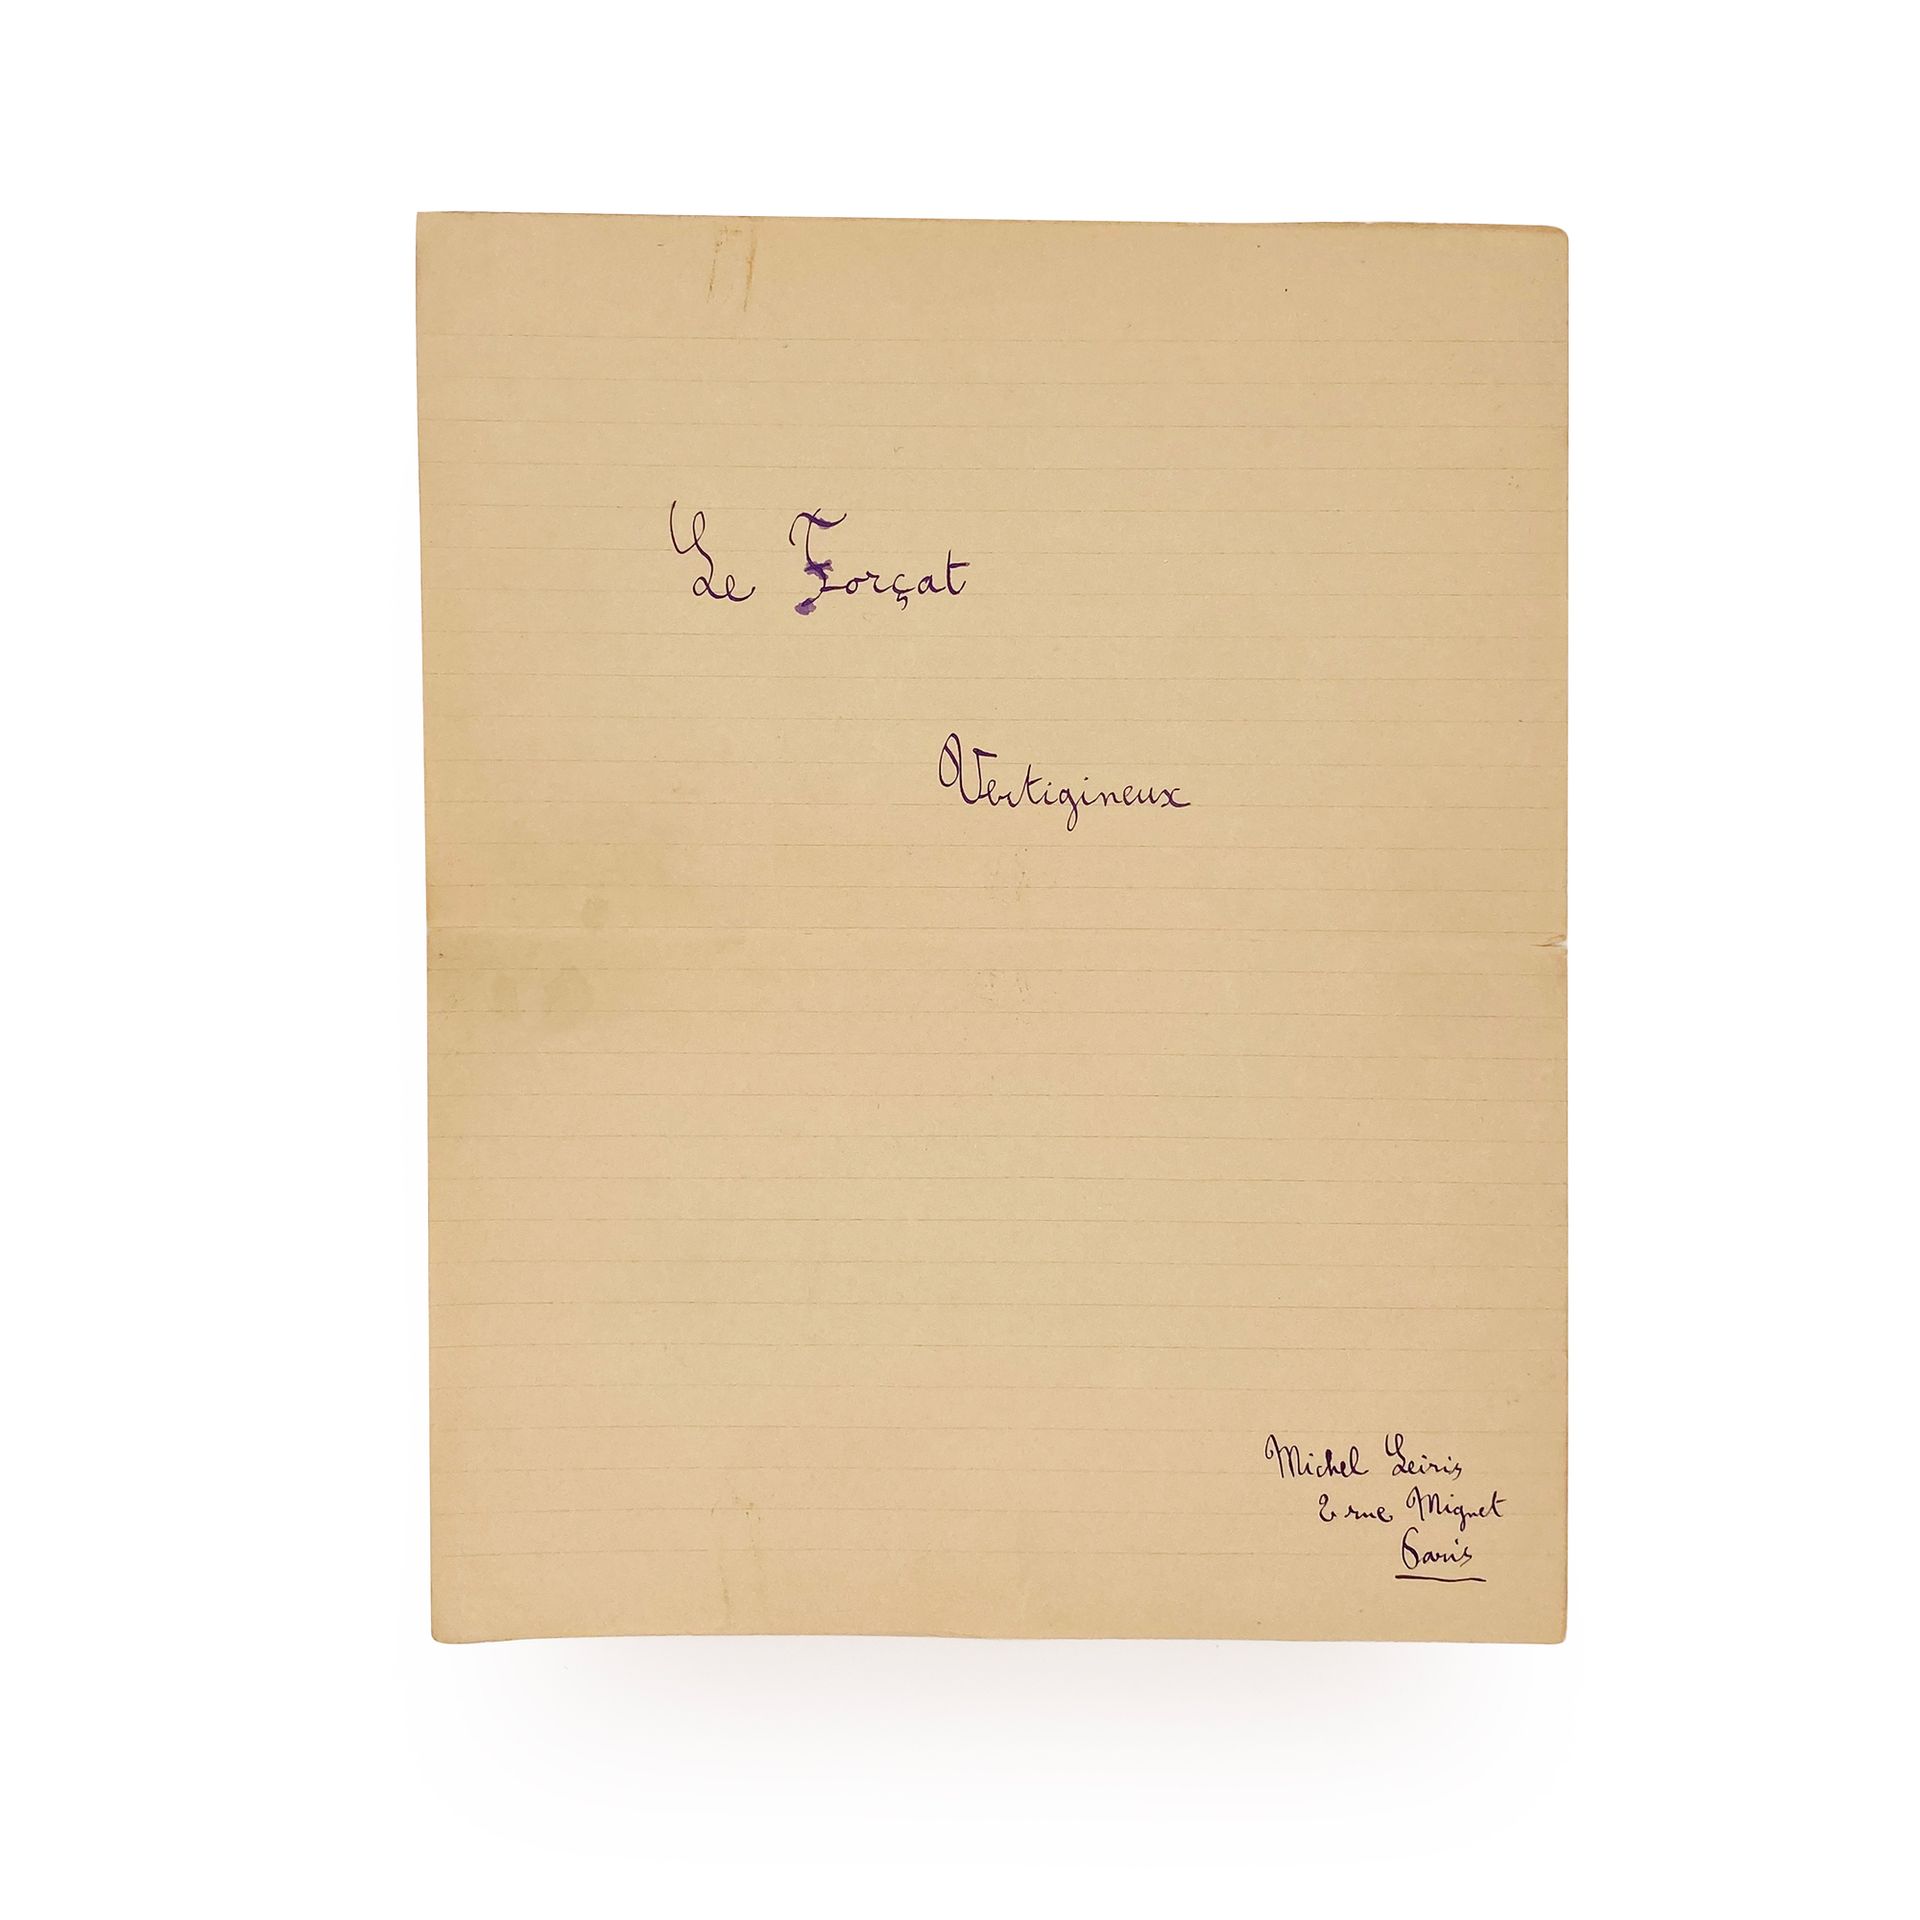 LEIRIS (Michel Le Forçat vertigineux. 26 novembre 1925.

Manoscritto autografo d&hellip;